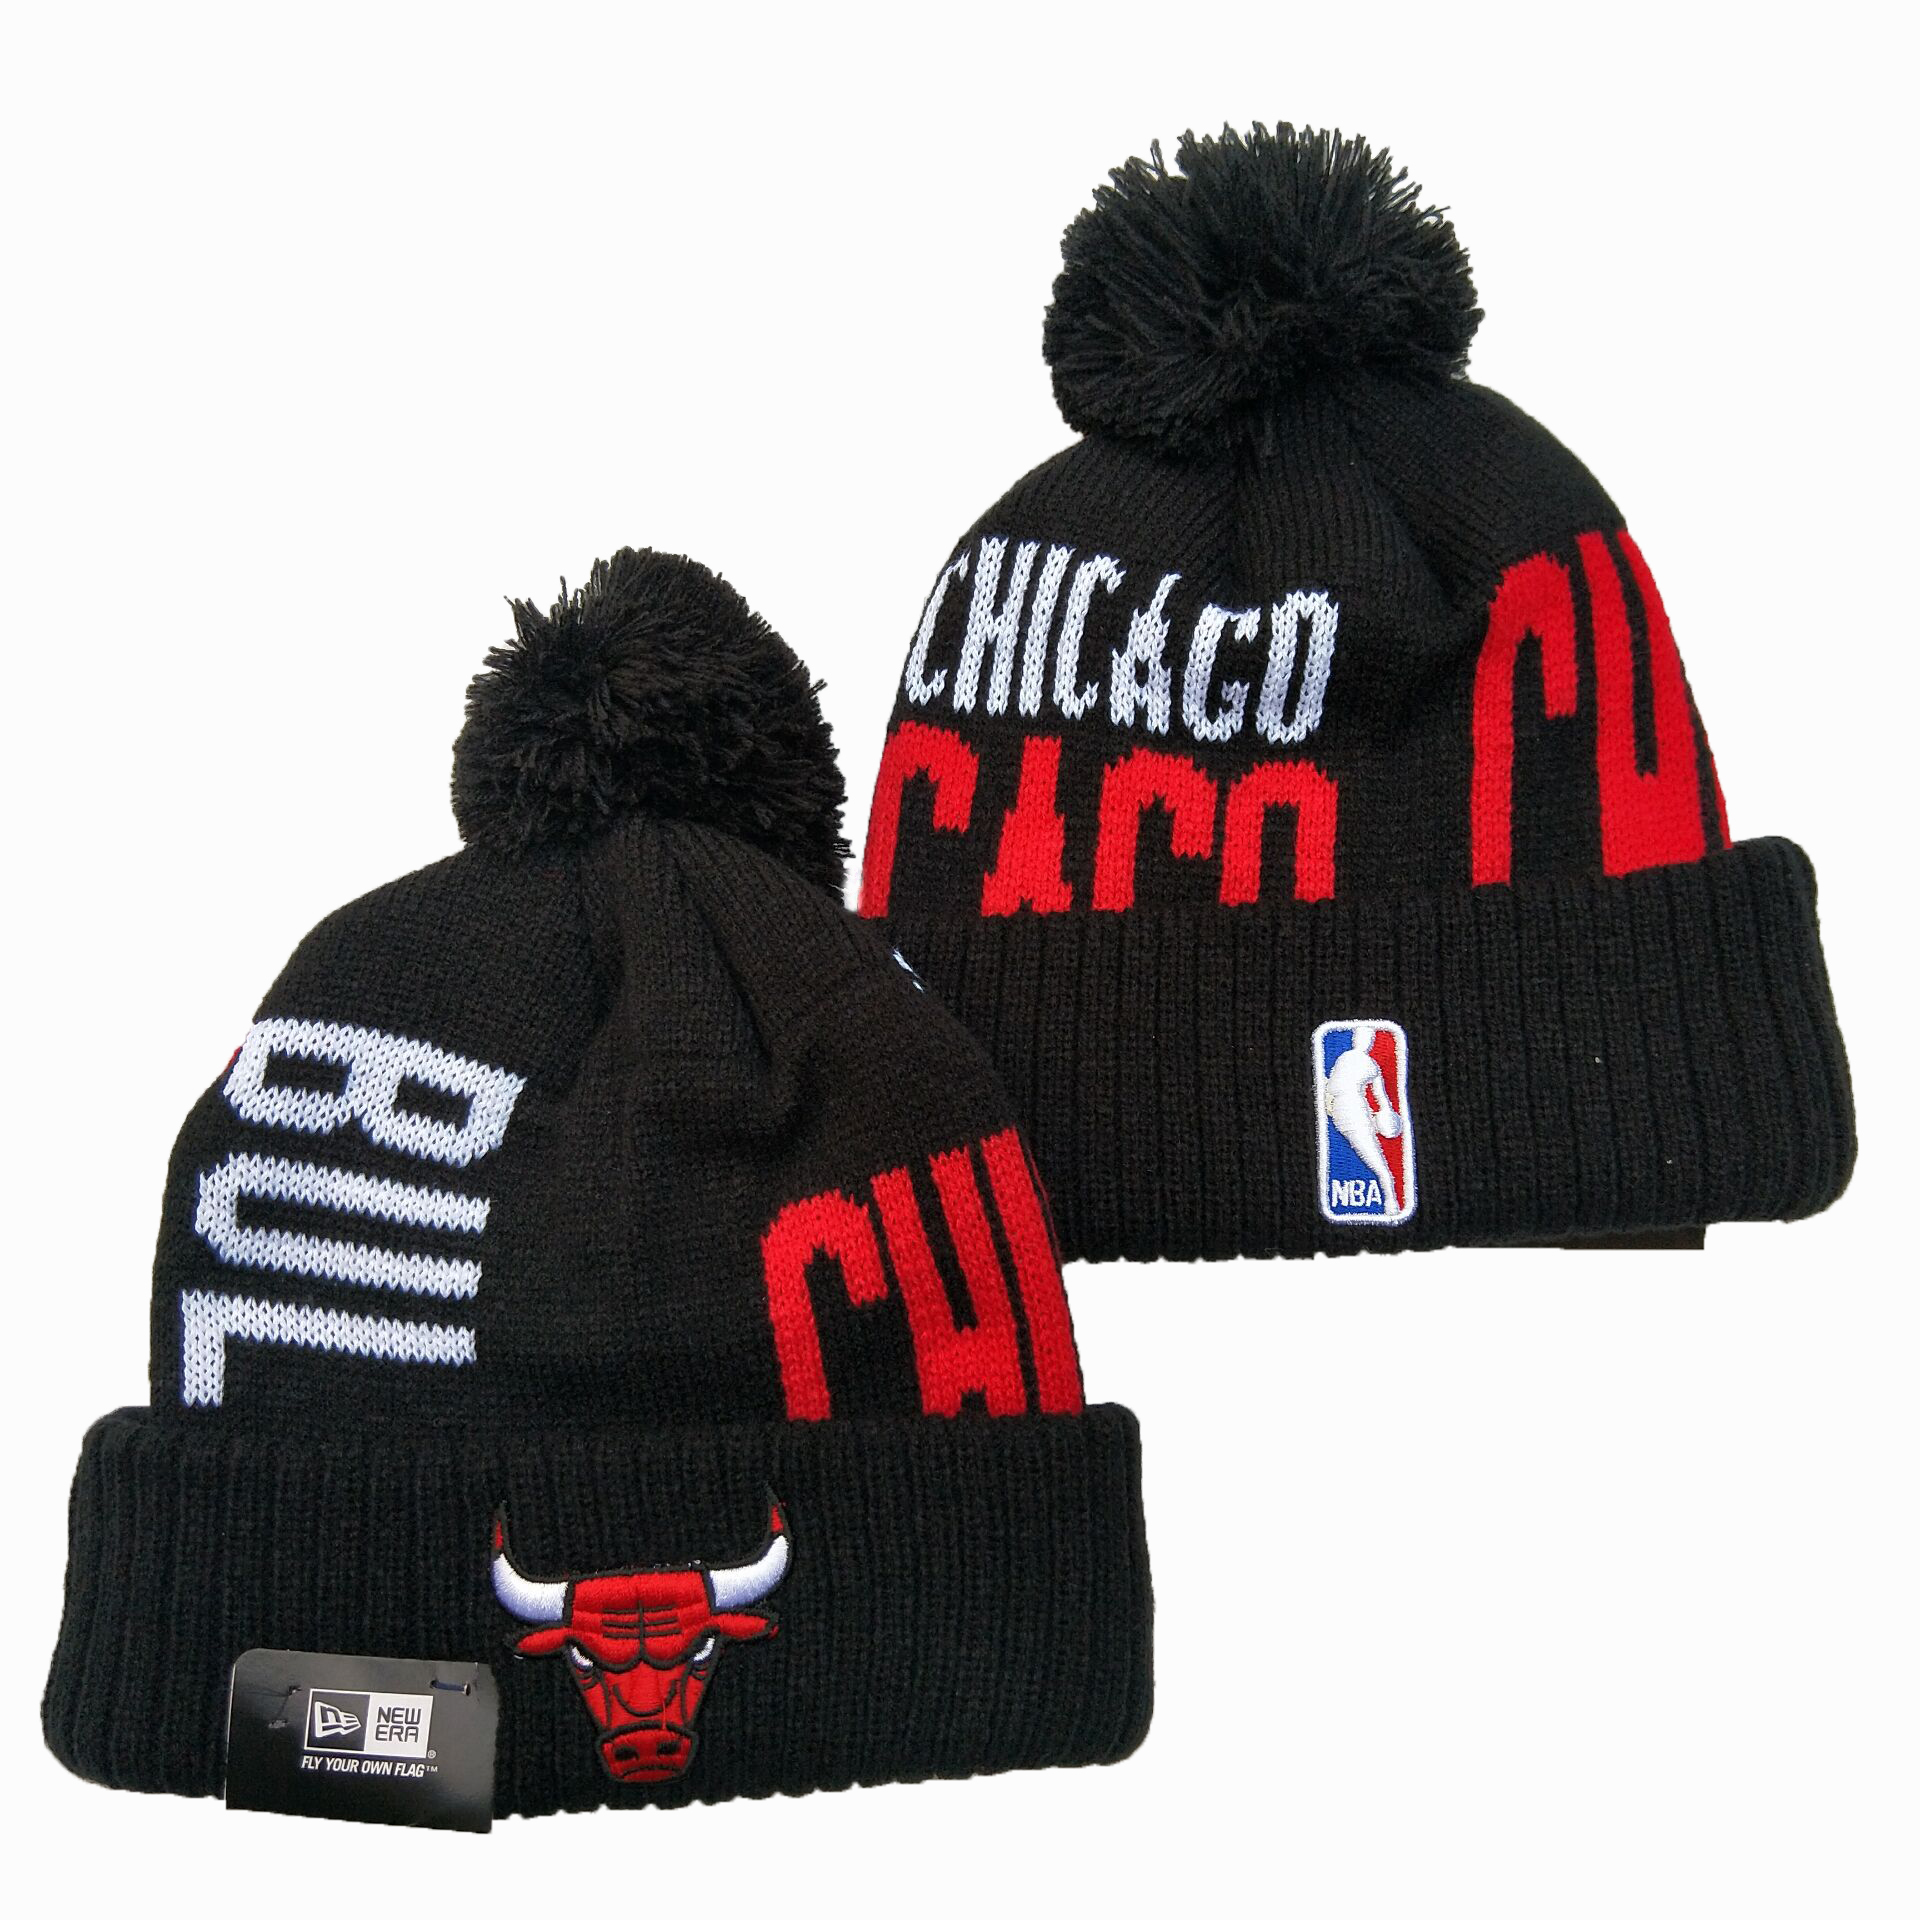 NBA Chicago Bulls Beanies Knit Hats-YD475